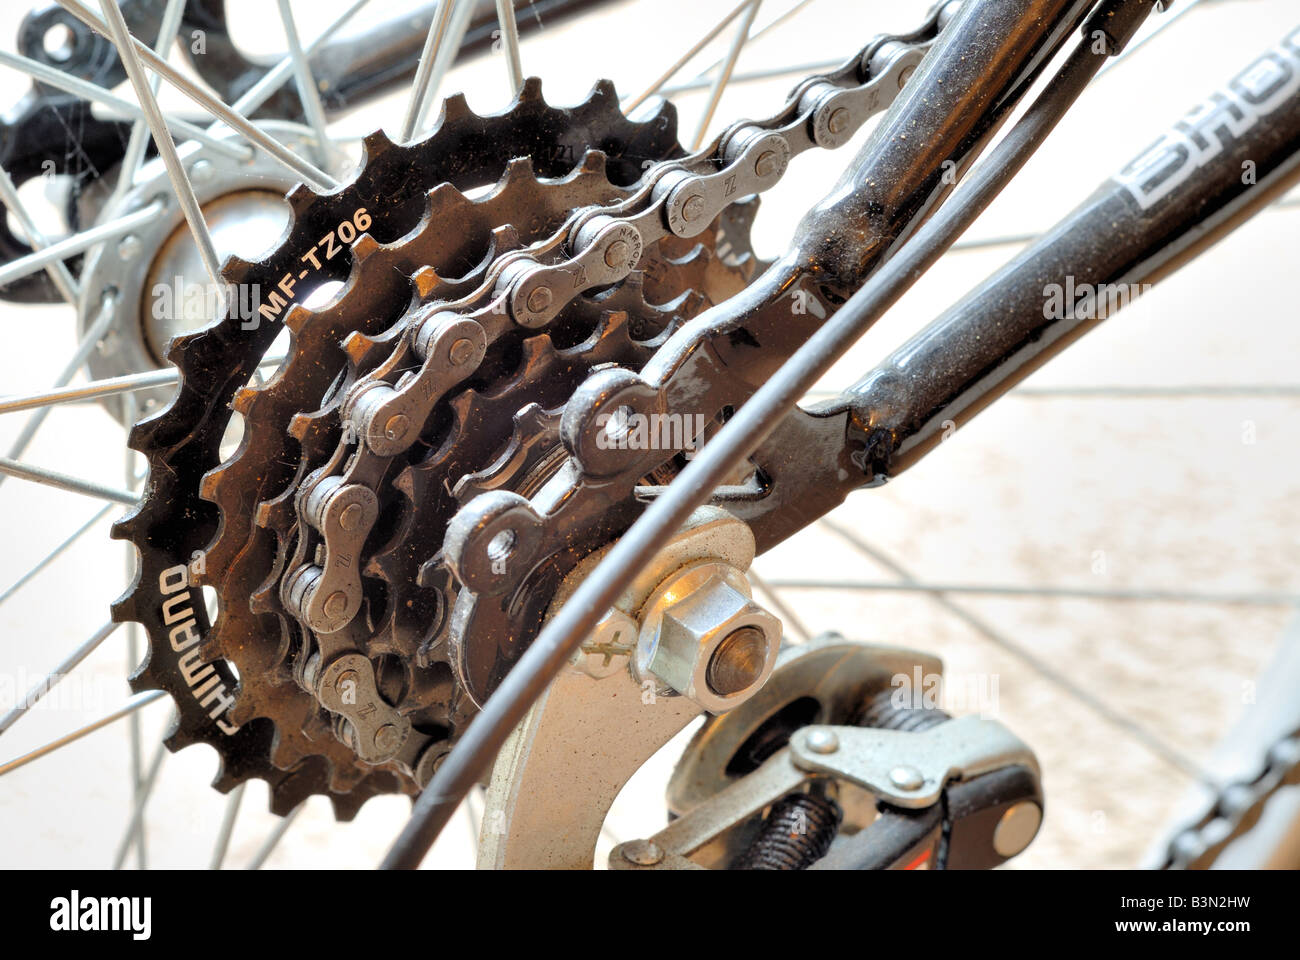 Bike bicycle gears Stock Photo